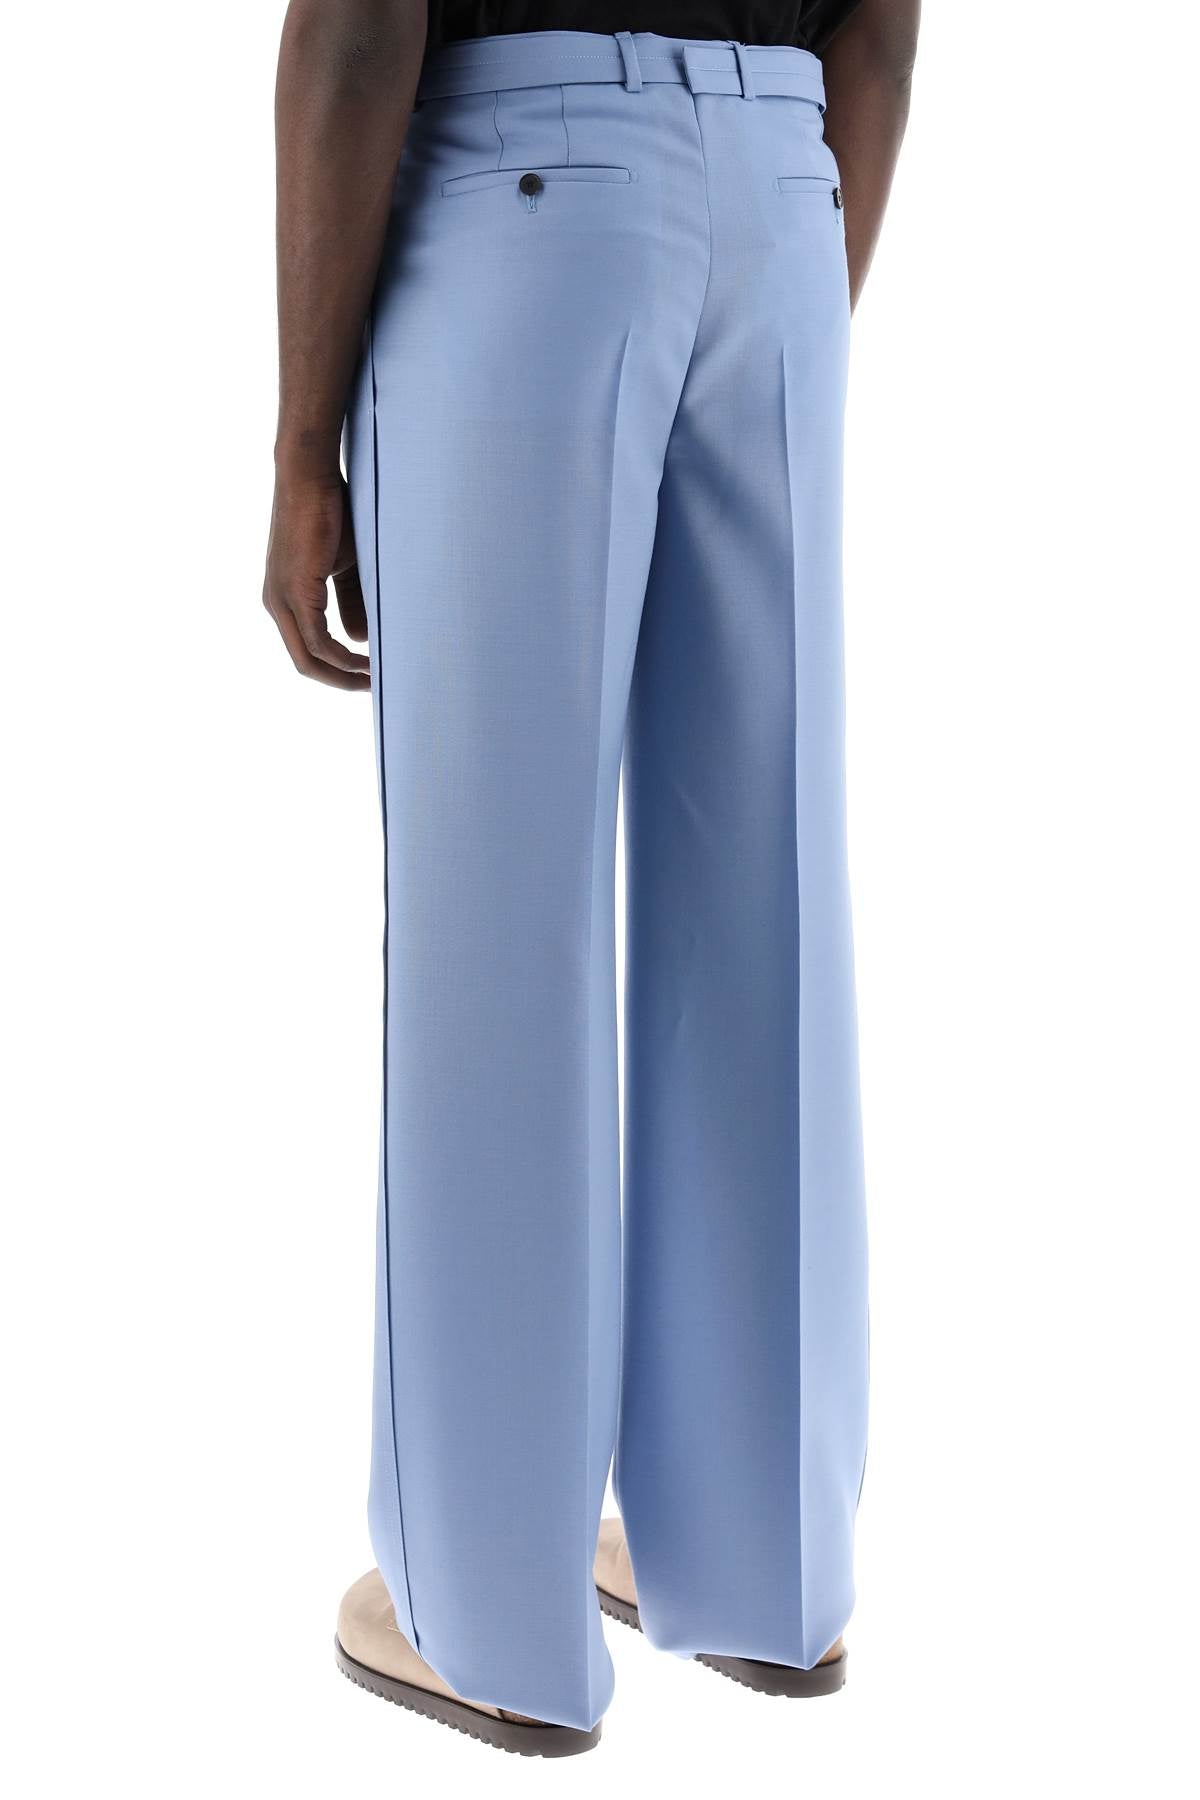 Lanvin tailored wide-leg trousers-2